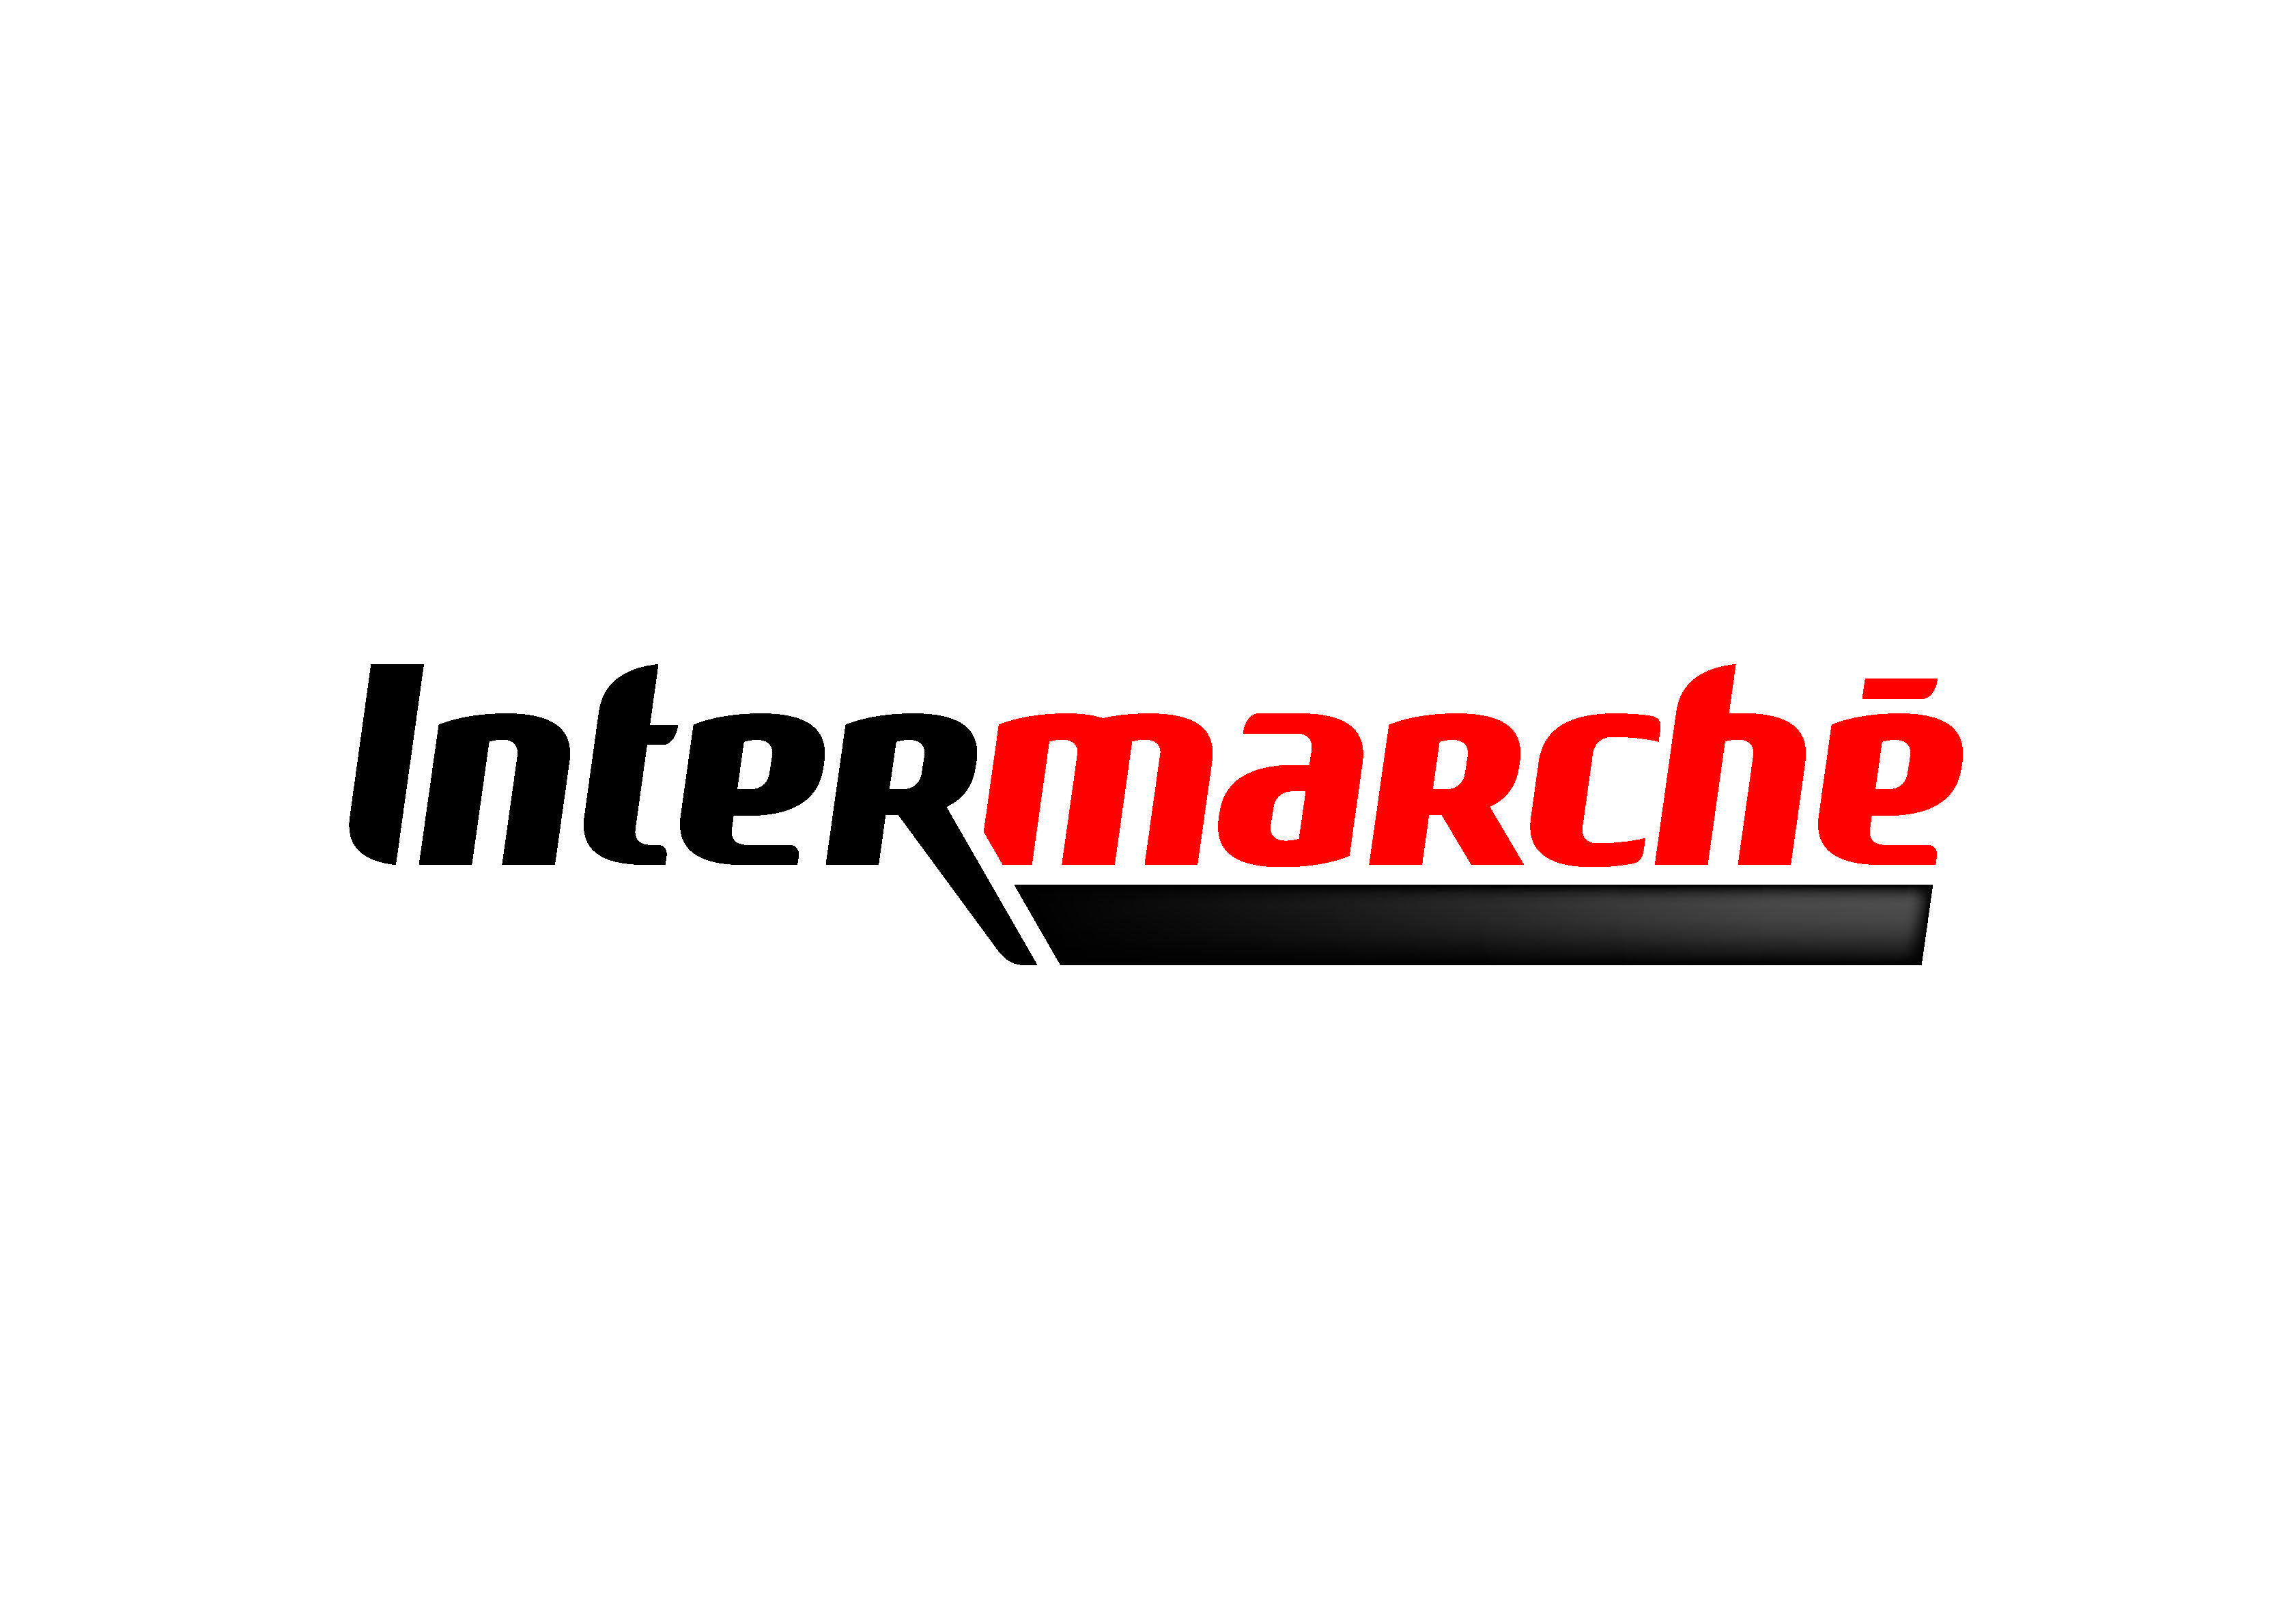 Intermarche Logo - Intermarche logo - tcc global